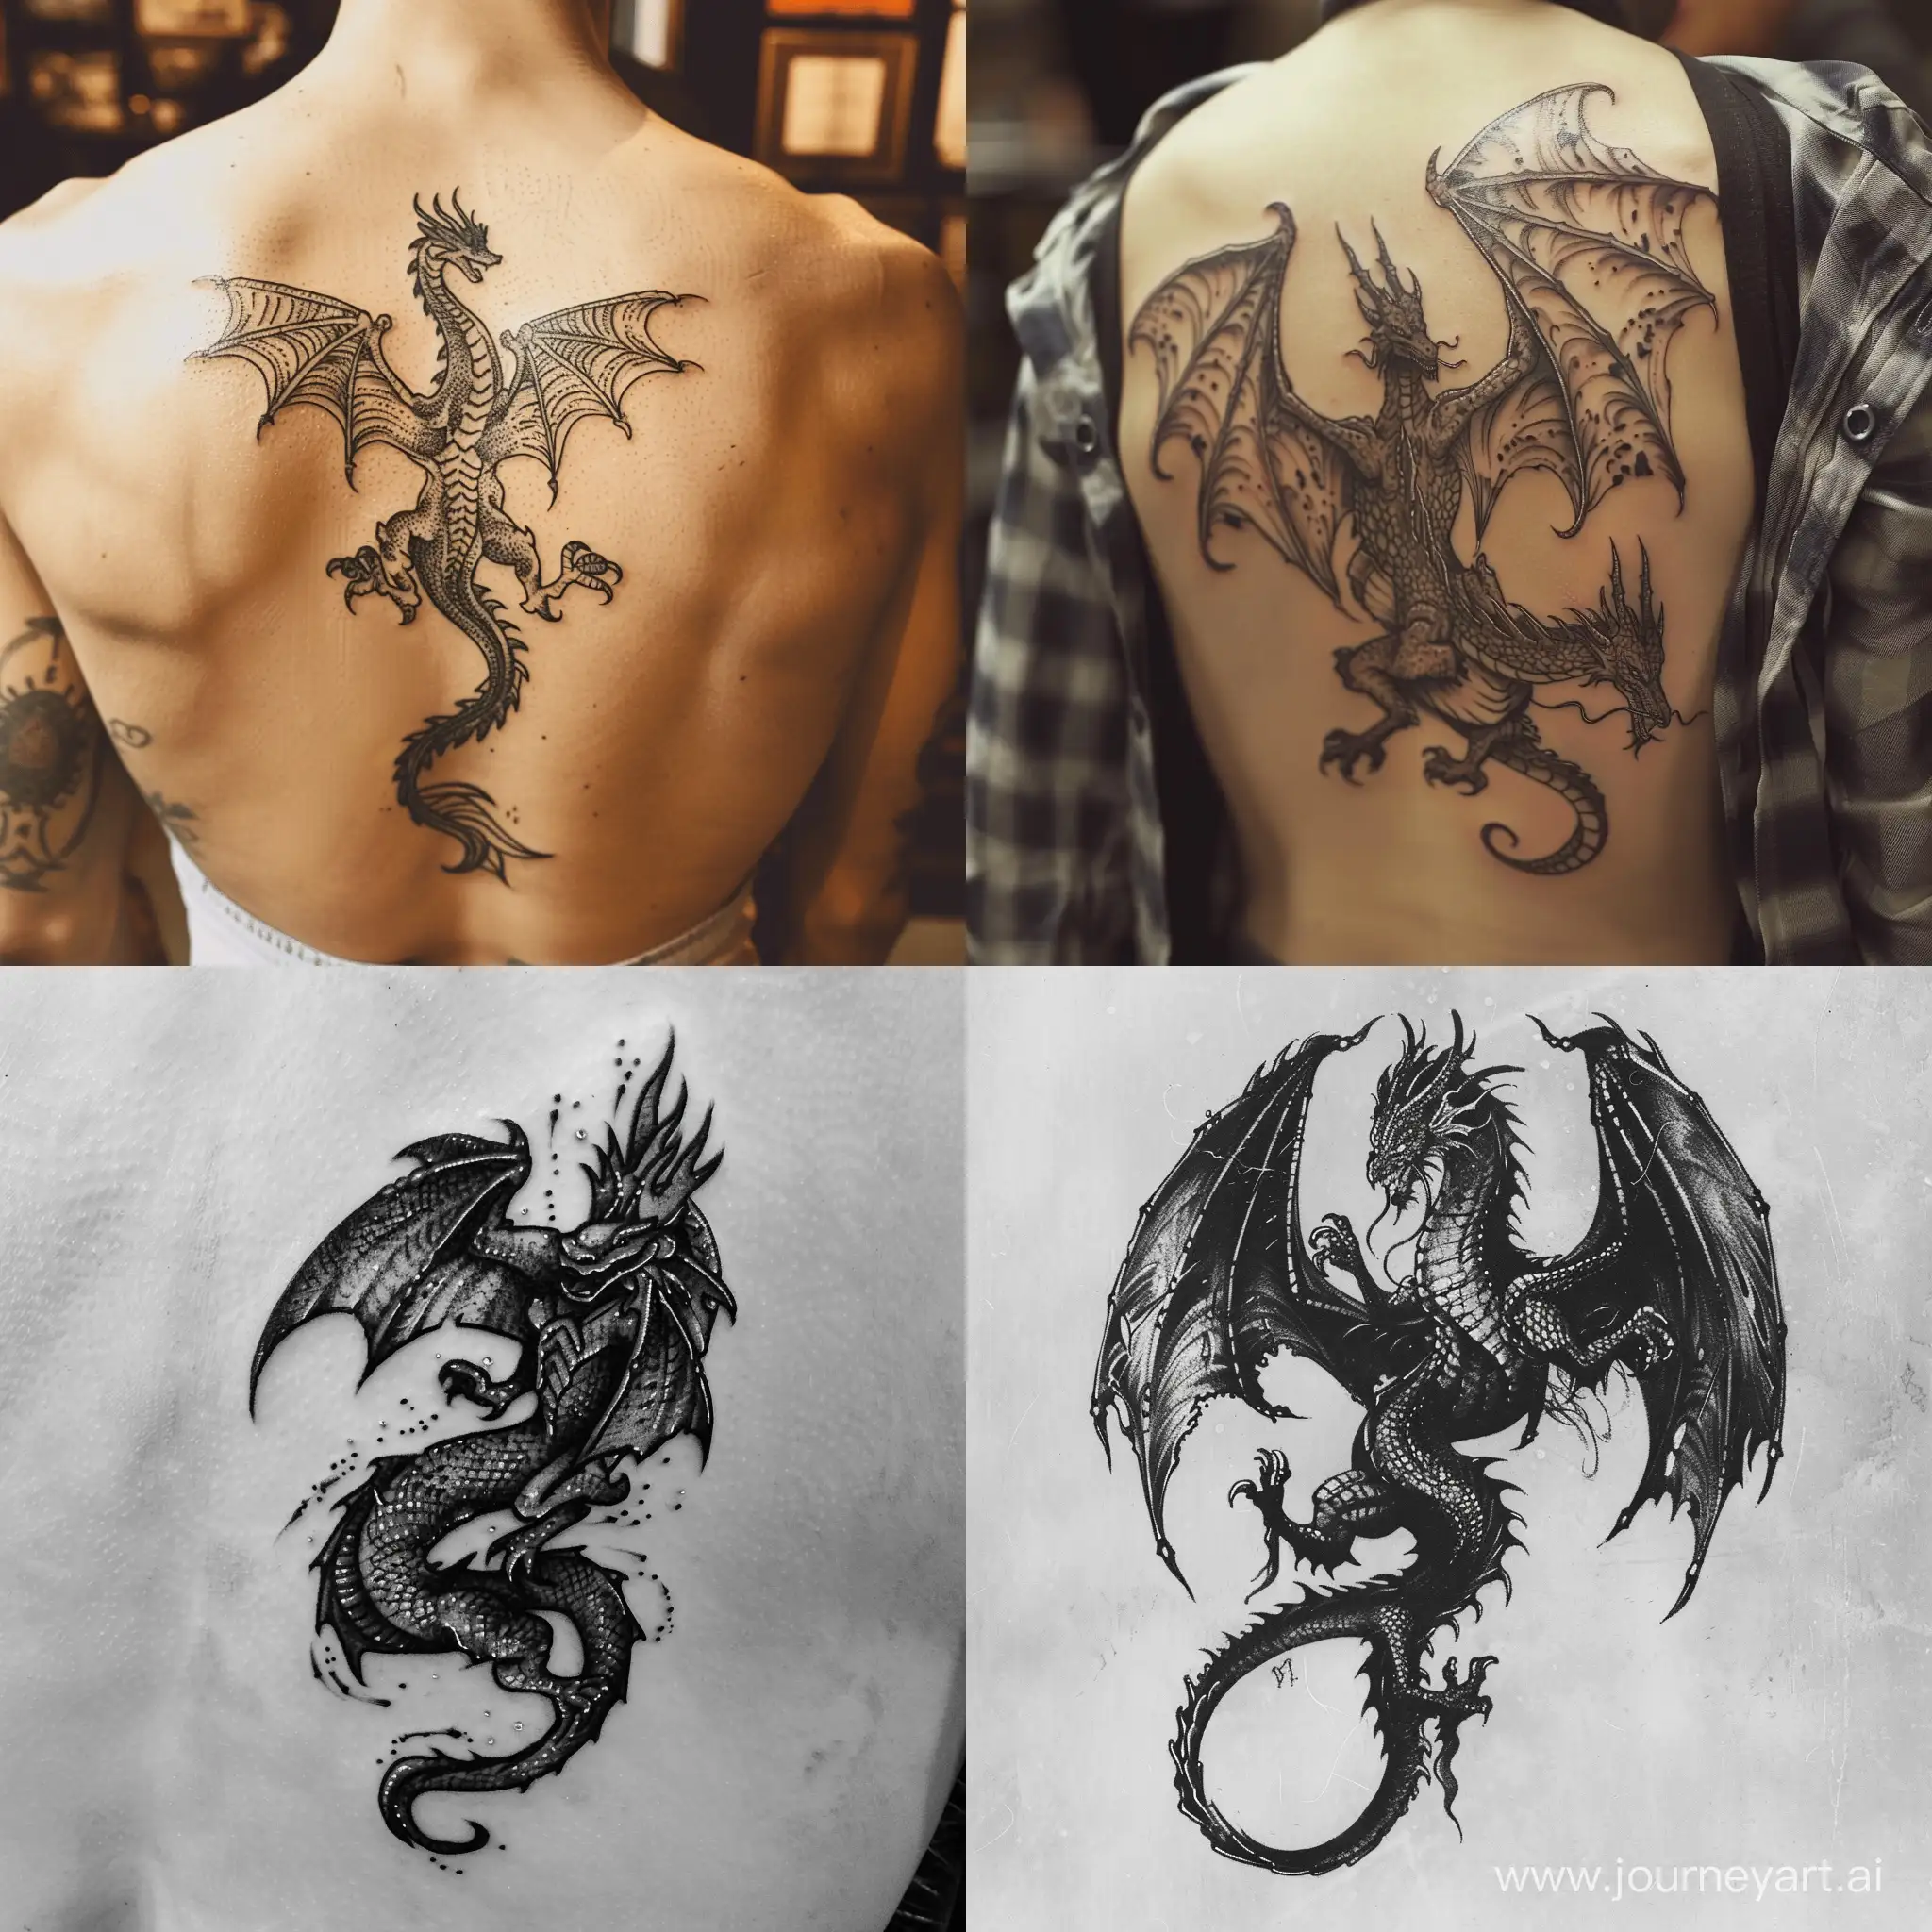 Majestic-Gothic-Dragon-Tattoo-Design-in-Square-Format